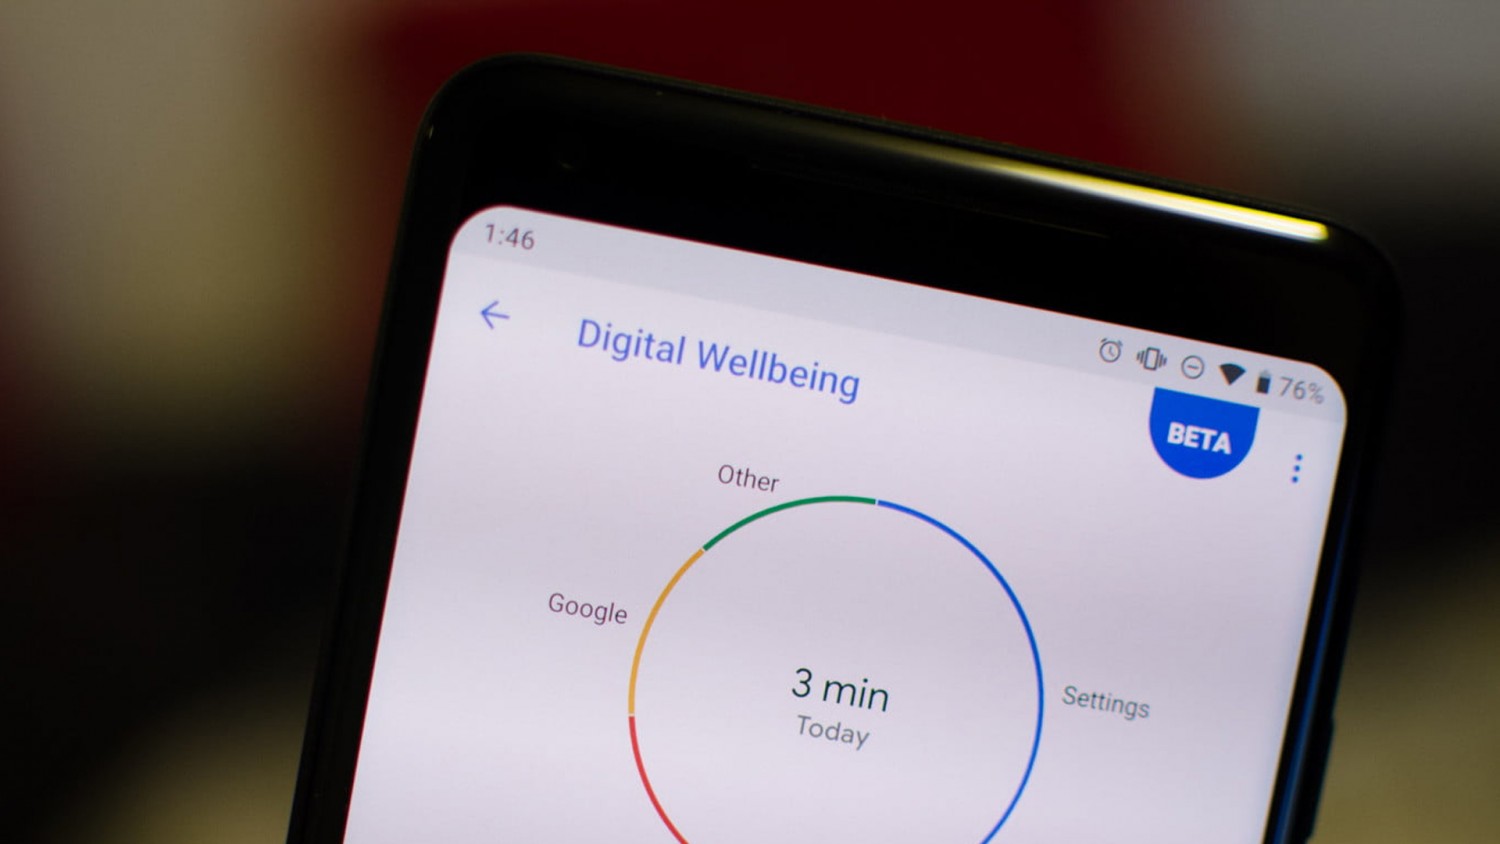 Google добавила в «Цифровое благополучие» режим «Концентрации внимания»